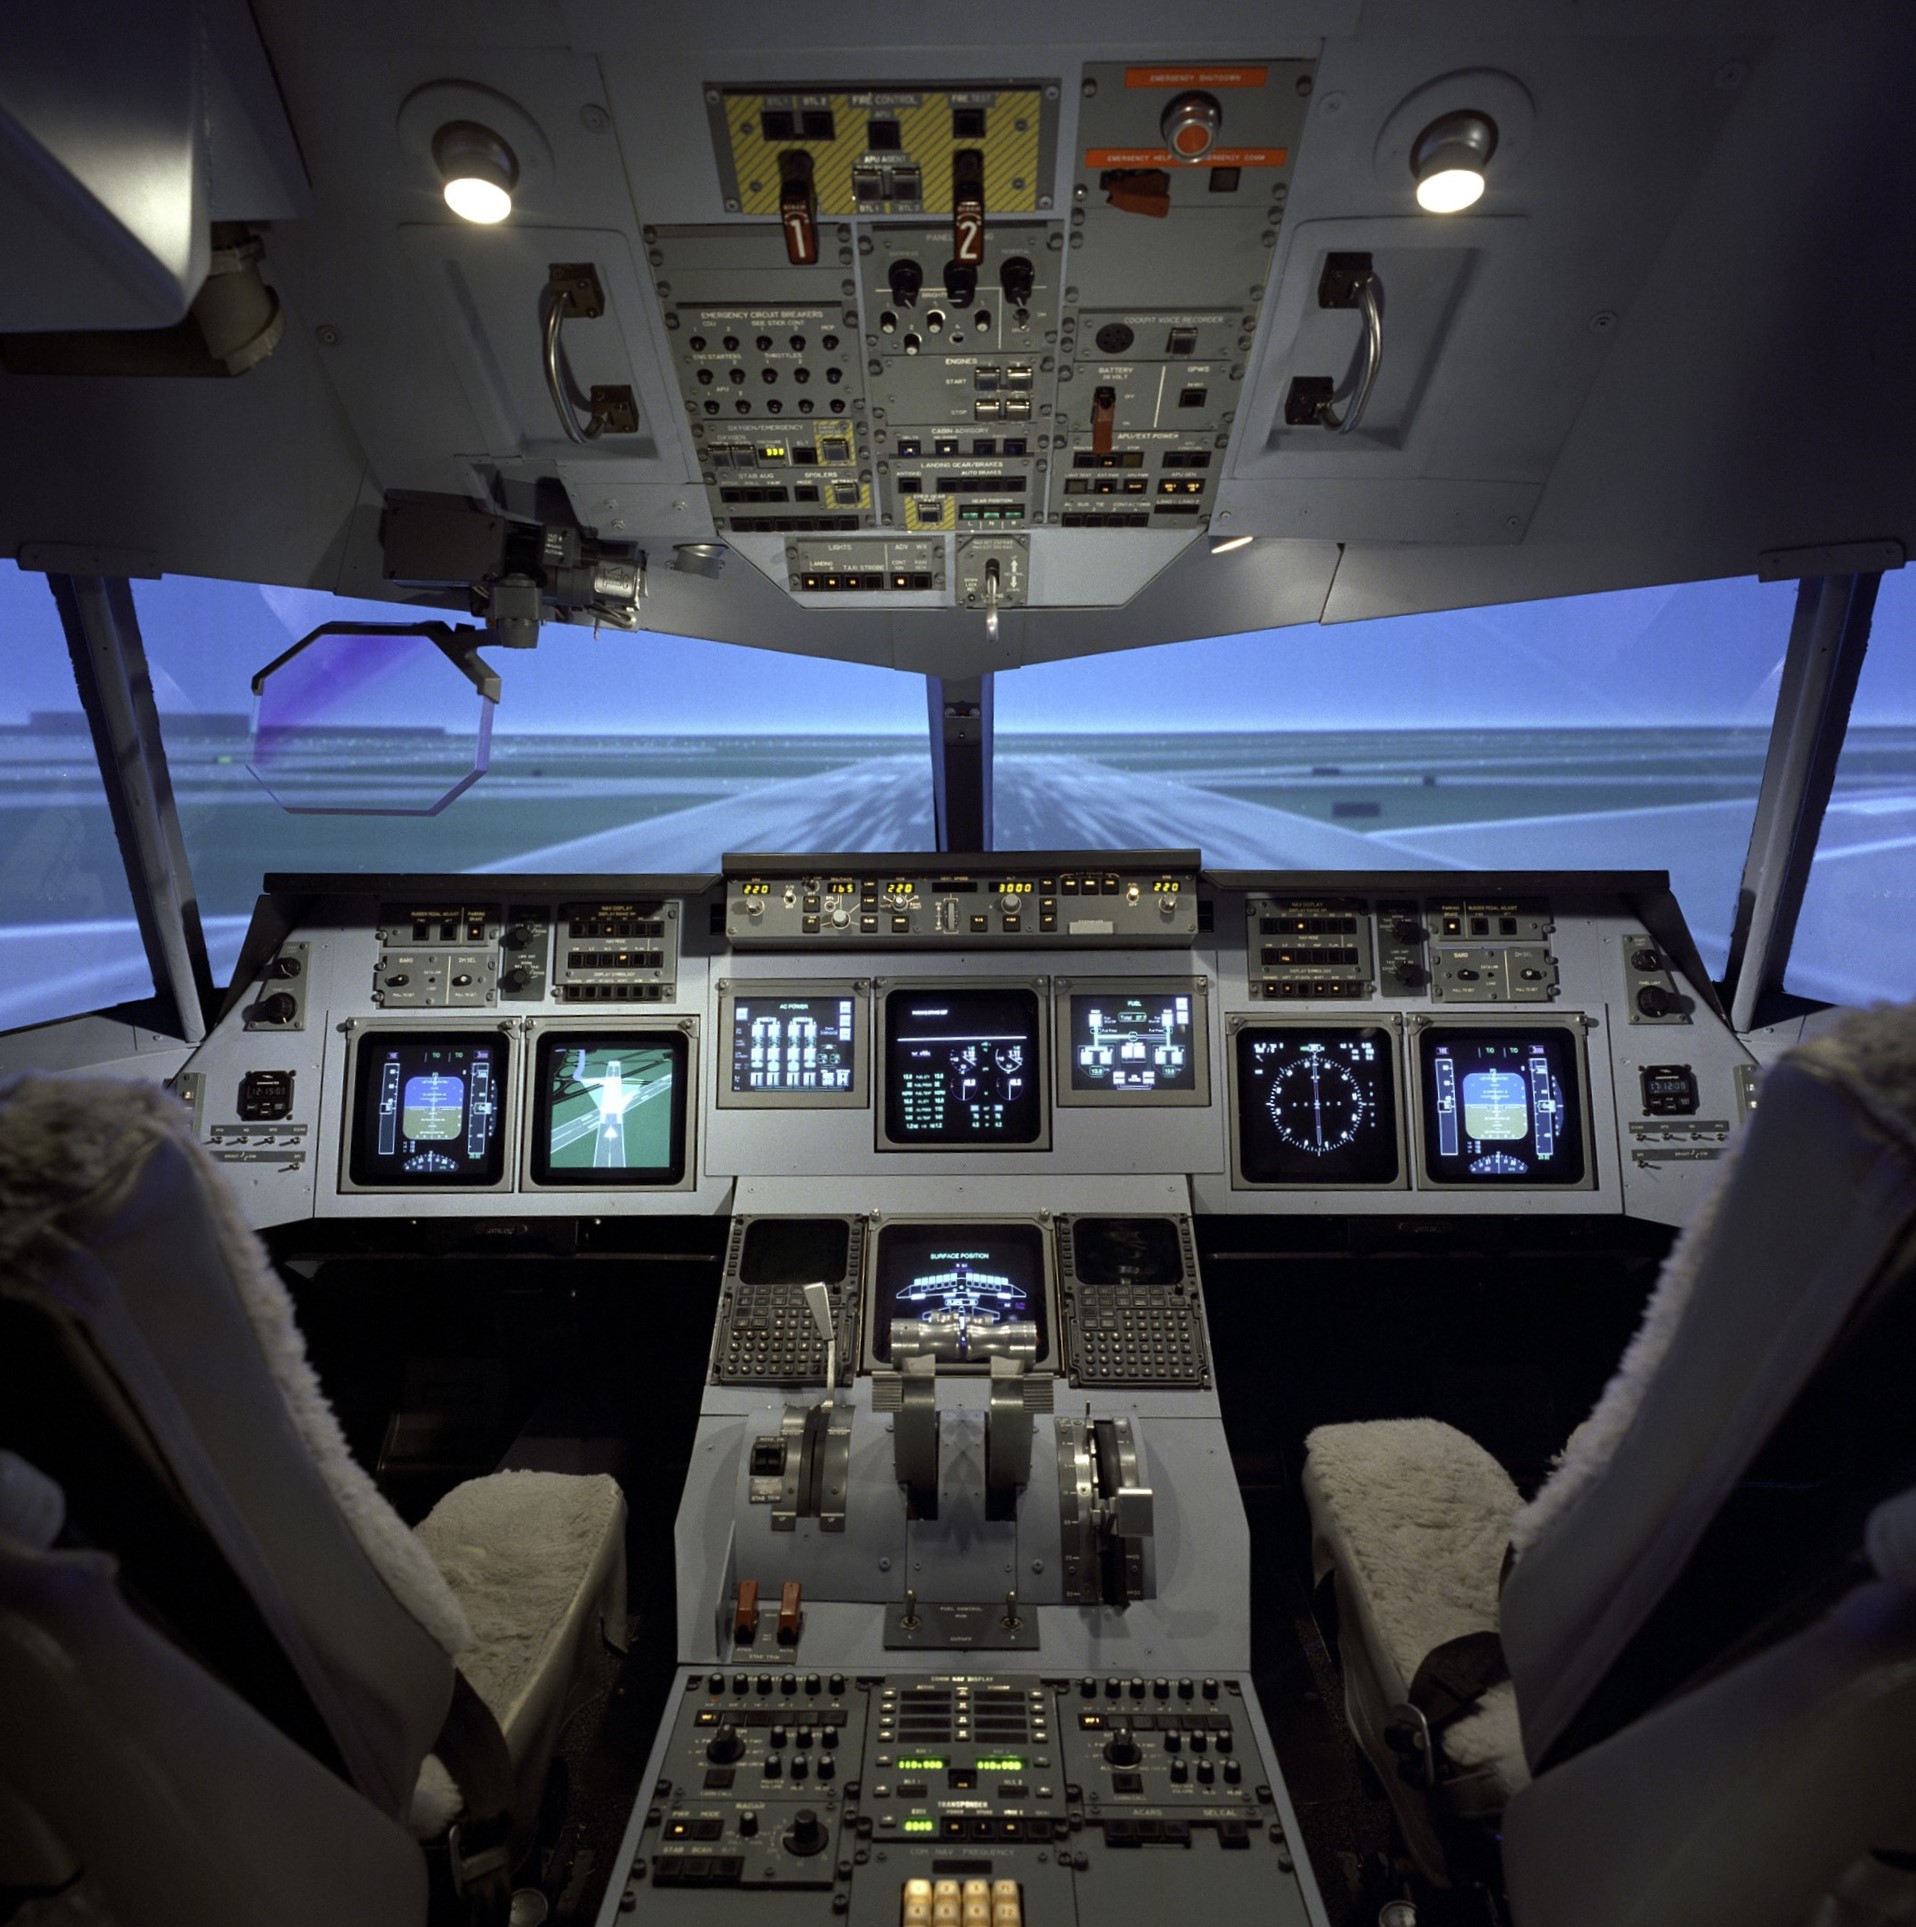 Advanced Concepts Flight Simulator, Control Room and Cab